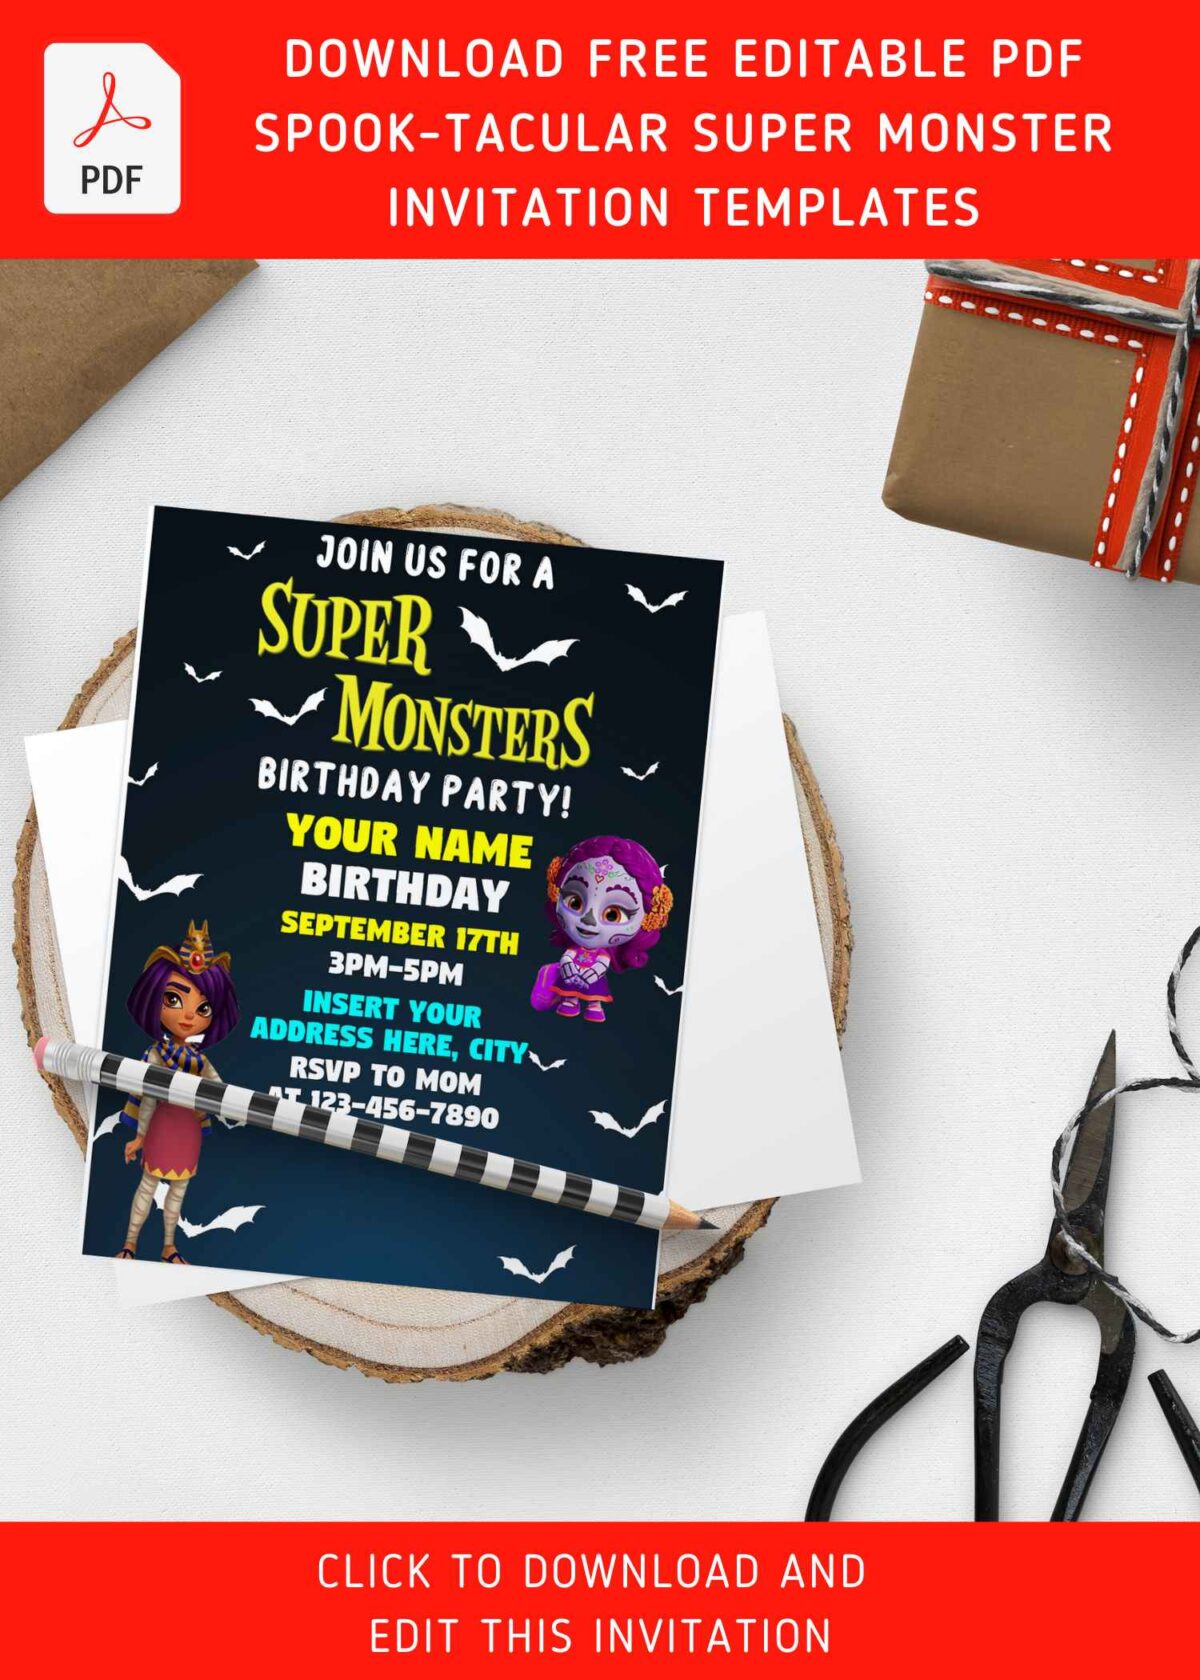 (Free Editable PDF) Spooktacular Super Monster Birthday Invitation Templates with editable text